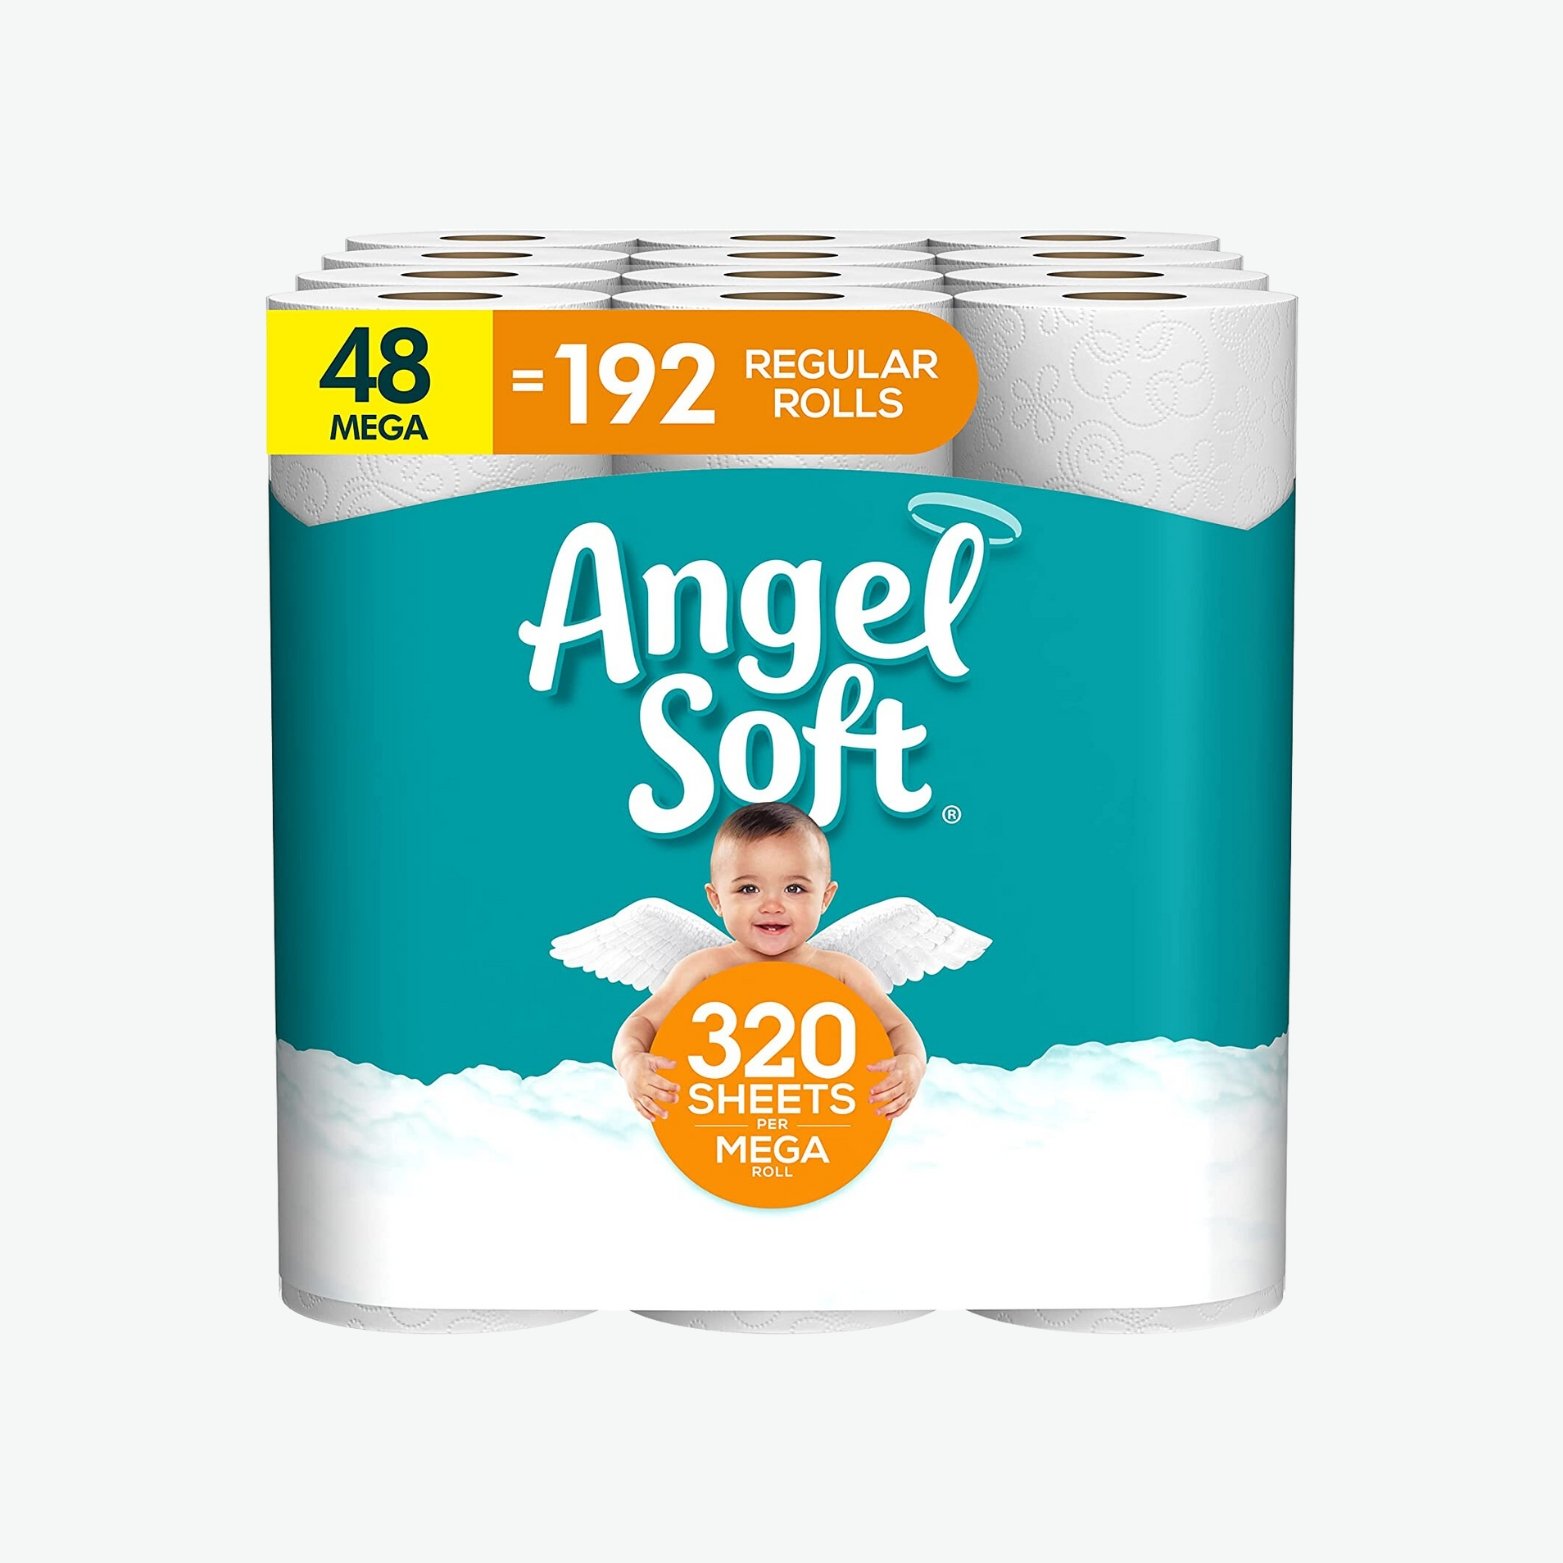 Angel Soft Toilet Paper Pack copy.jpg